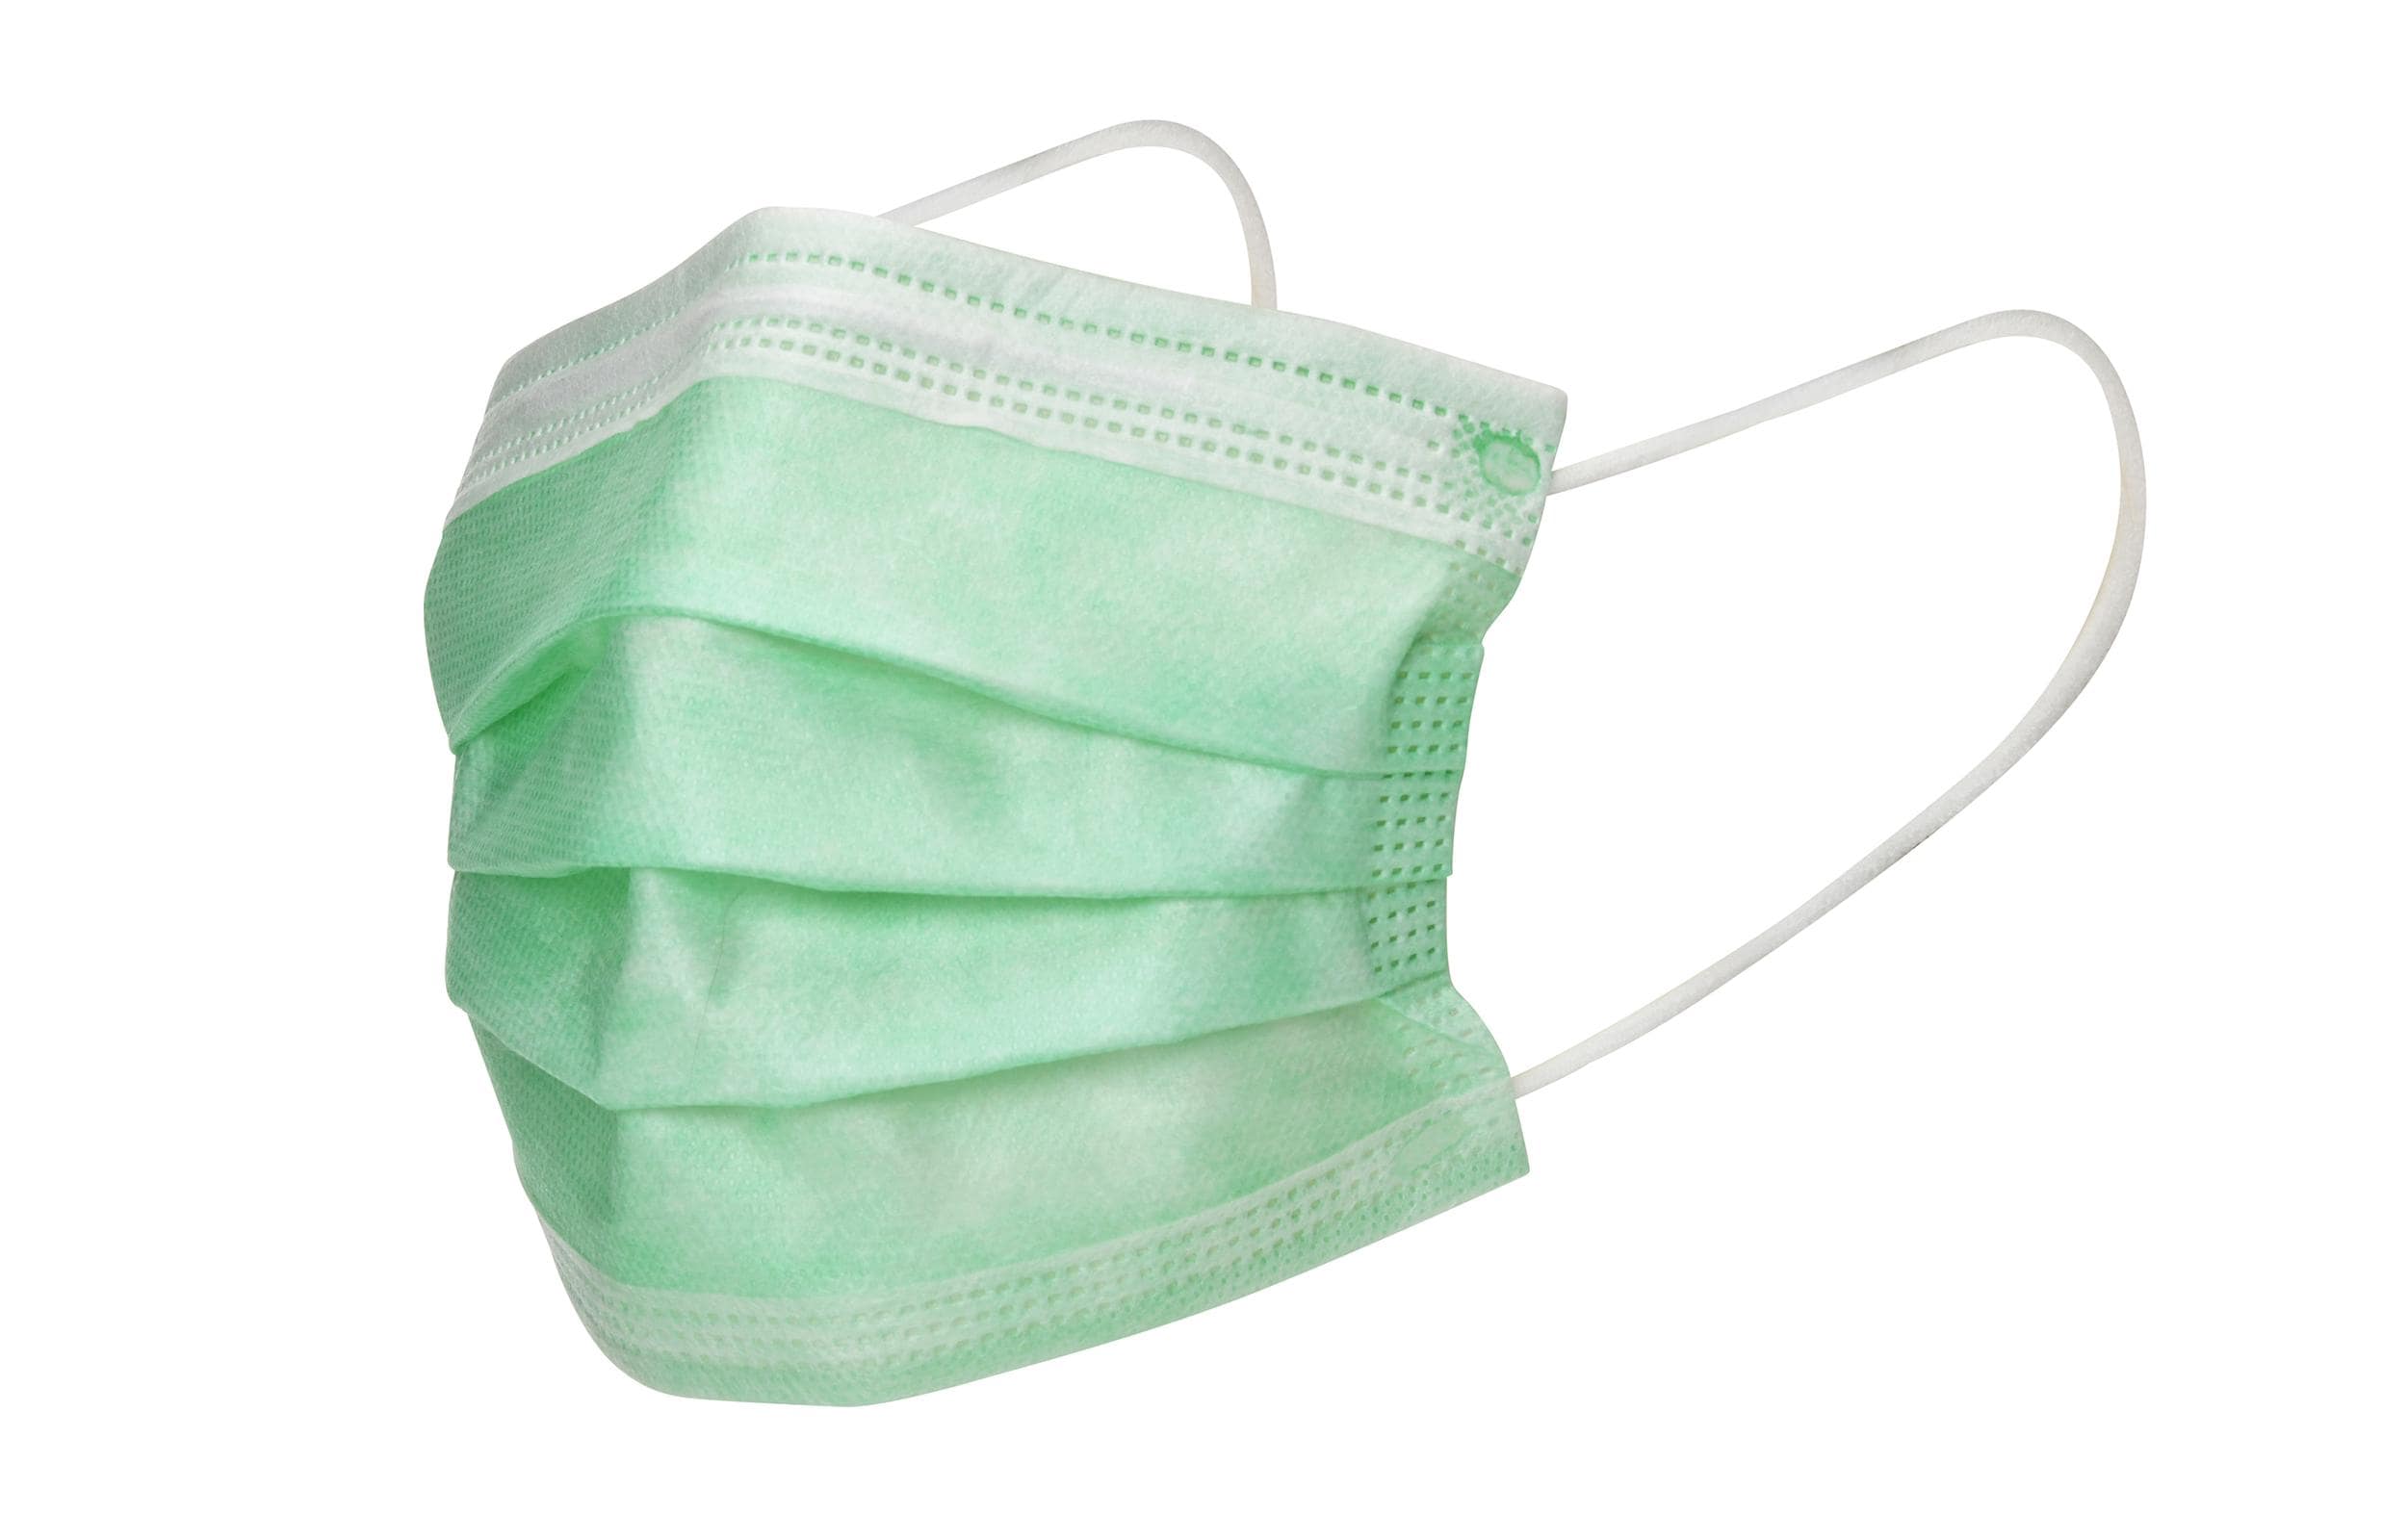 WERO SWISS PROTECT Hygienemaske Typ IIR, 50 Stück Small Size für Kinder